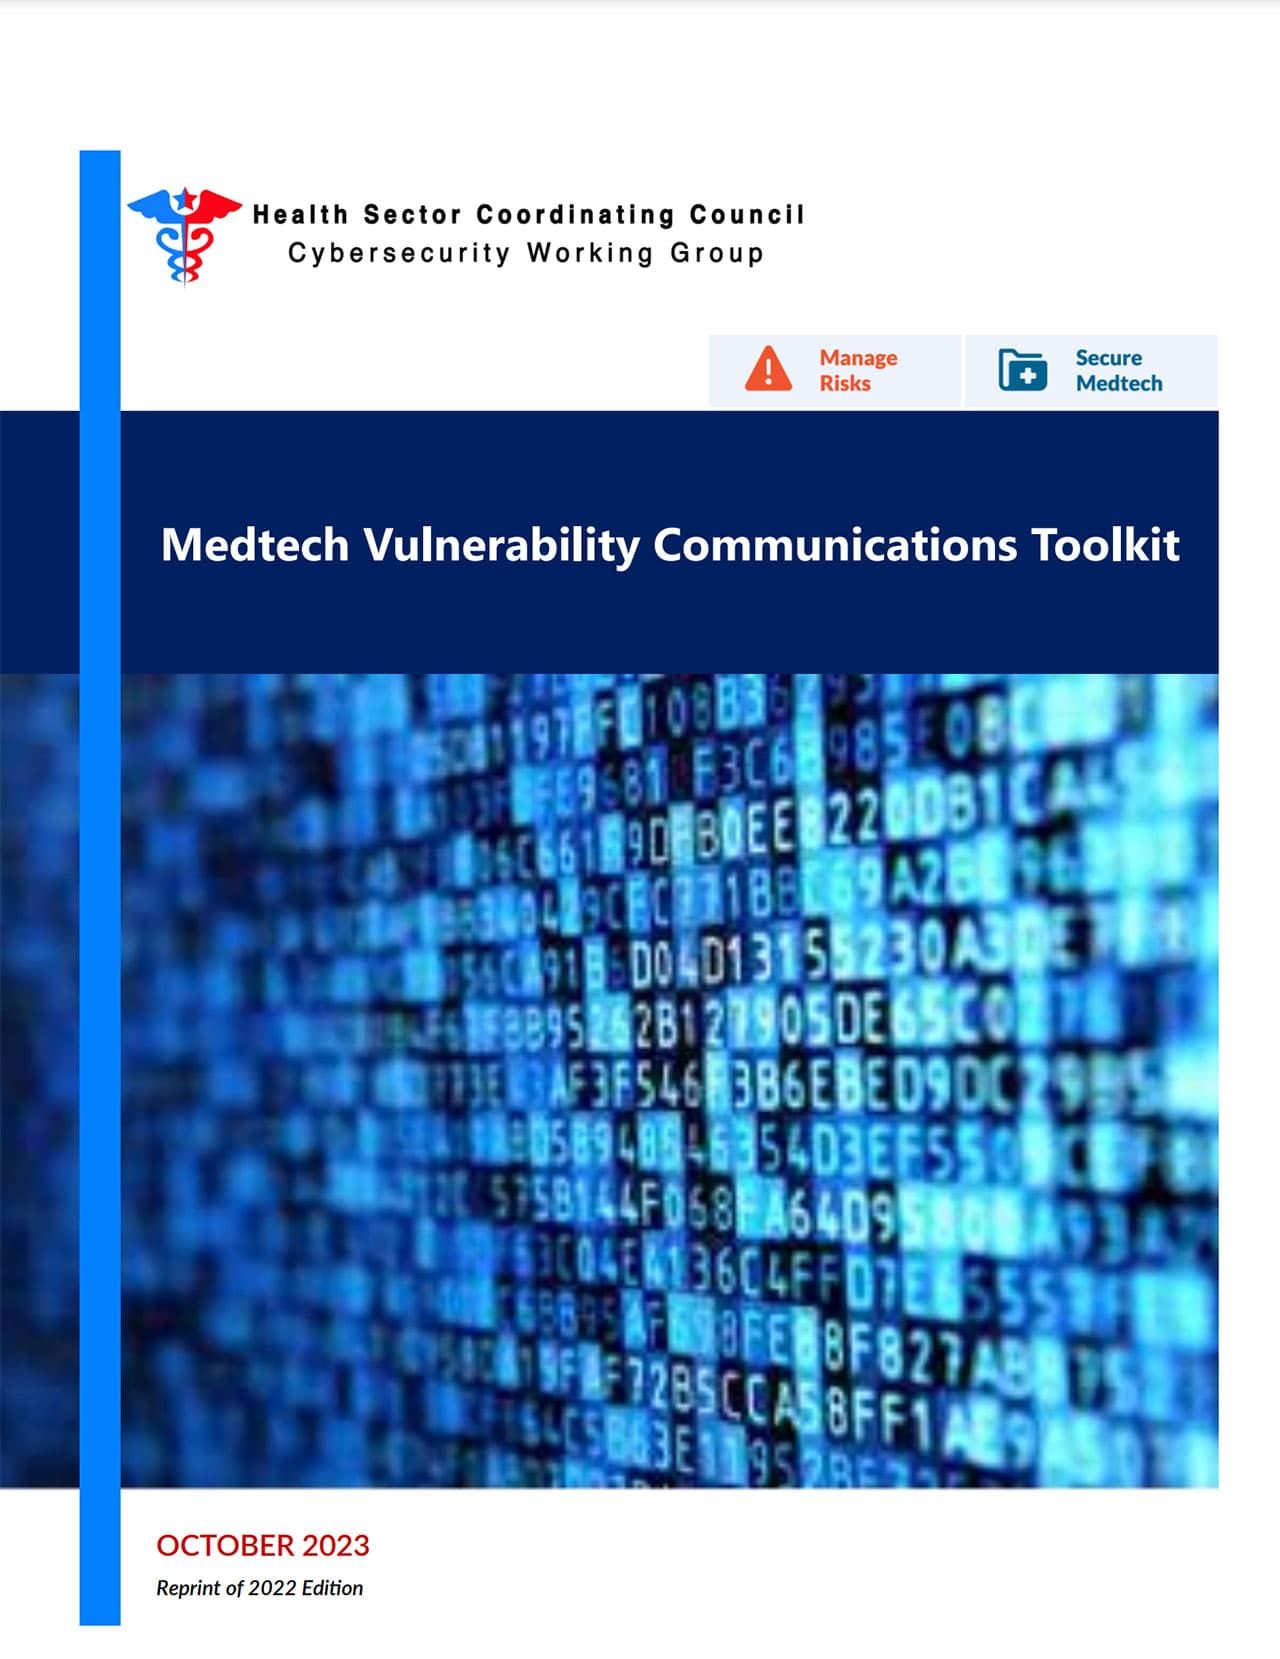 Medtech Vulnerability Communications Toolkit (MVCT)